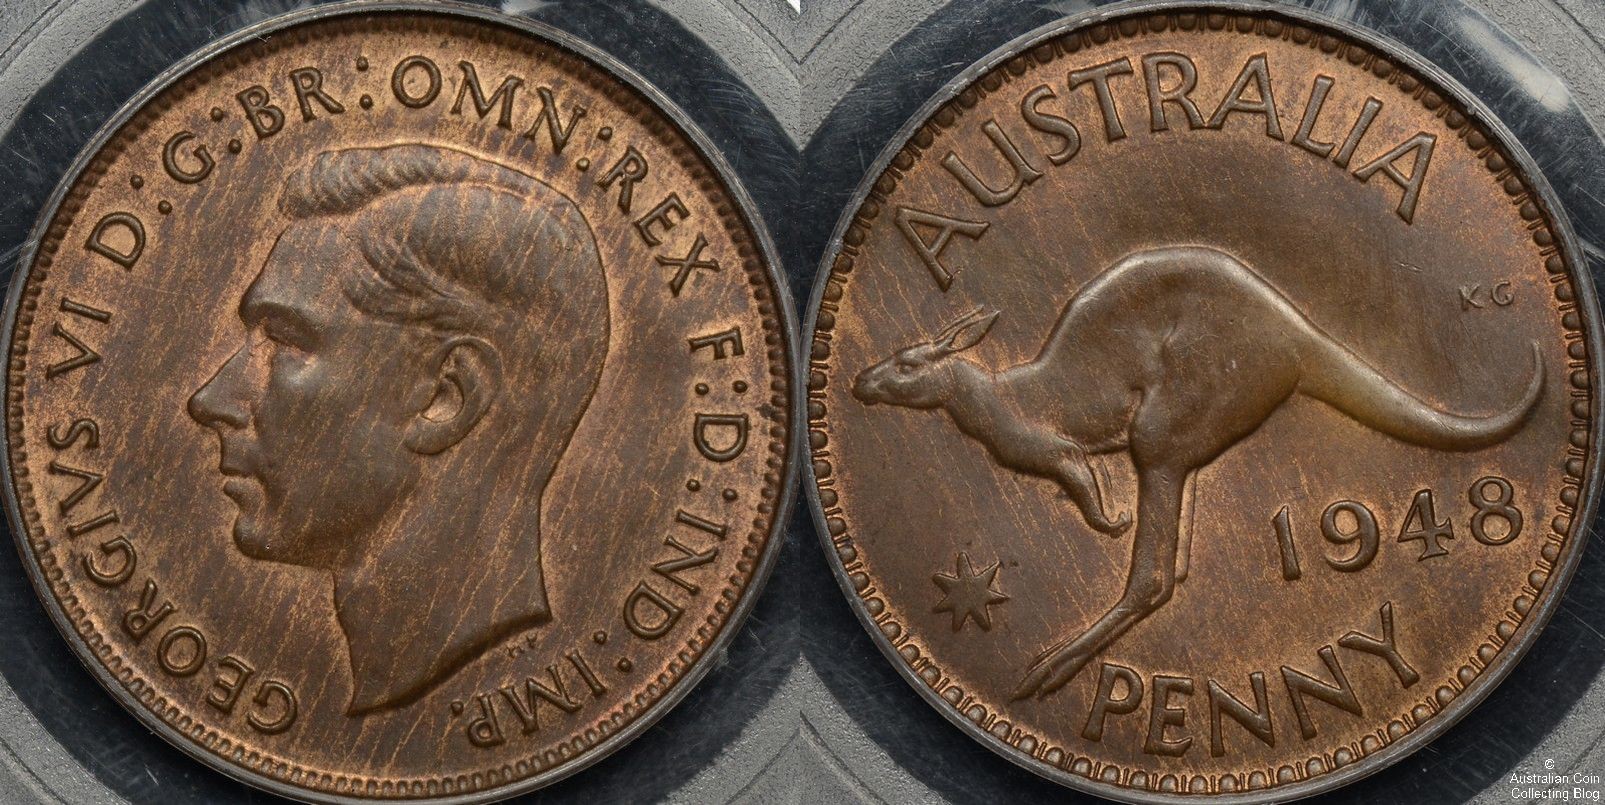 Australia 1948 Penny PCGS MS64RB